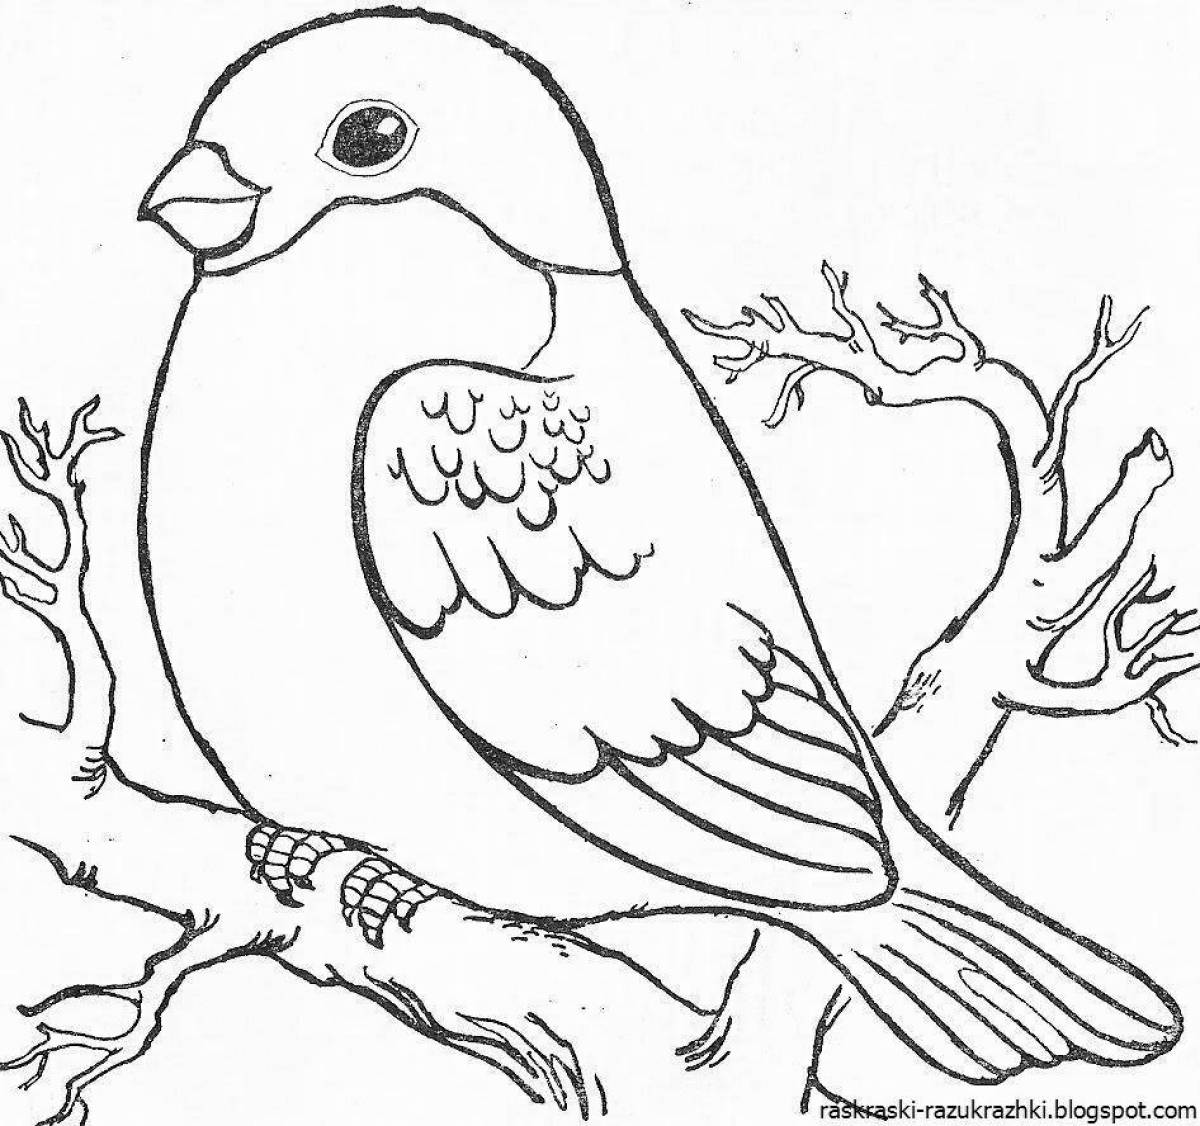 Creative drawing of a bullfinch